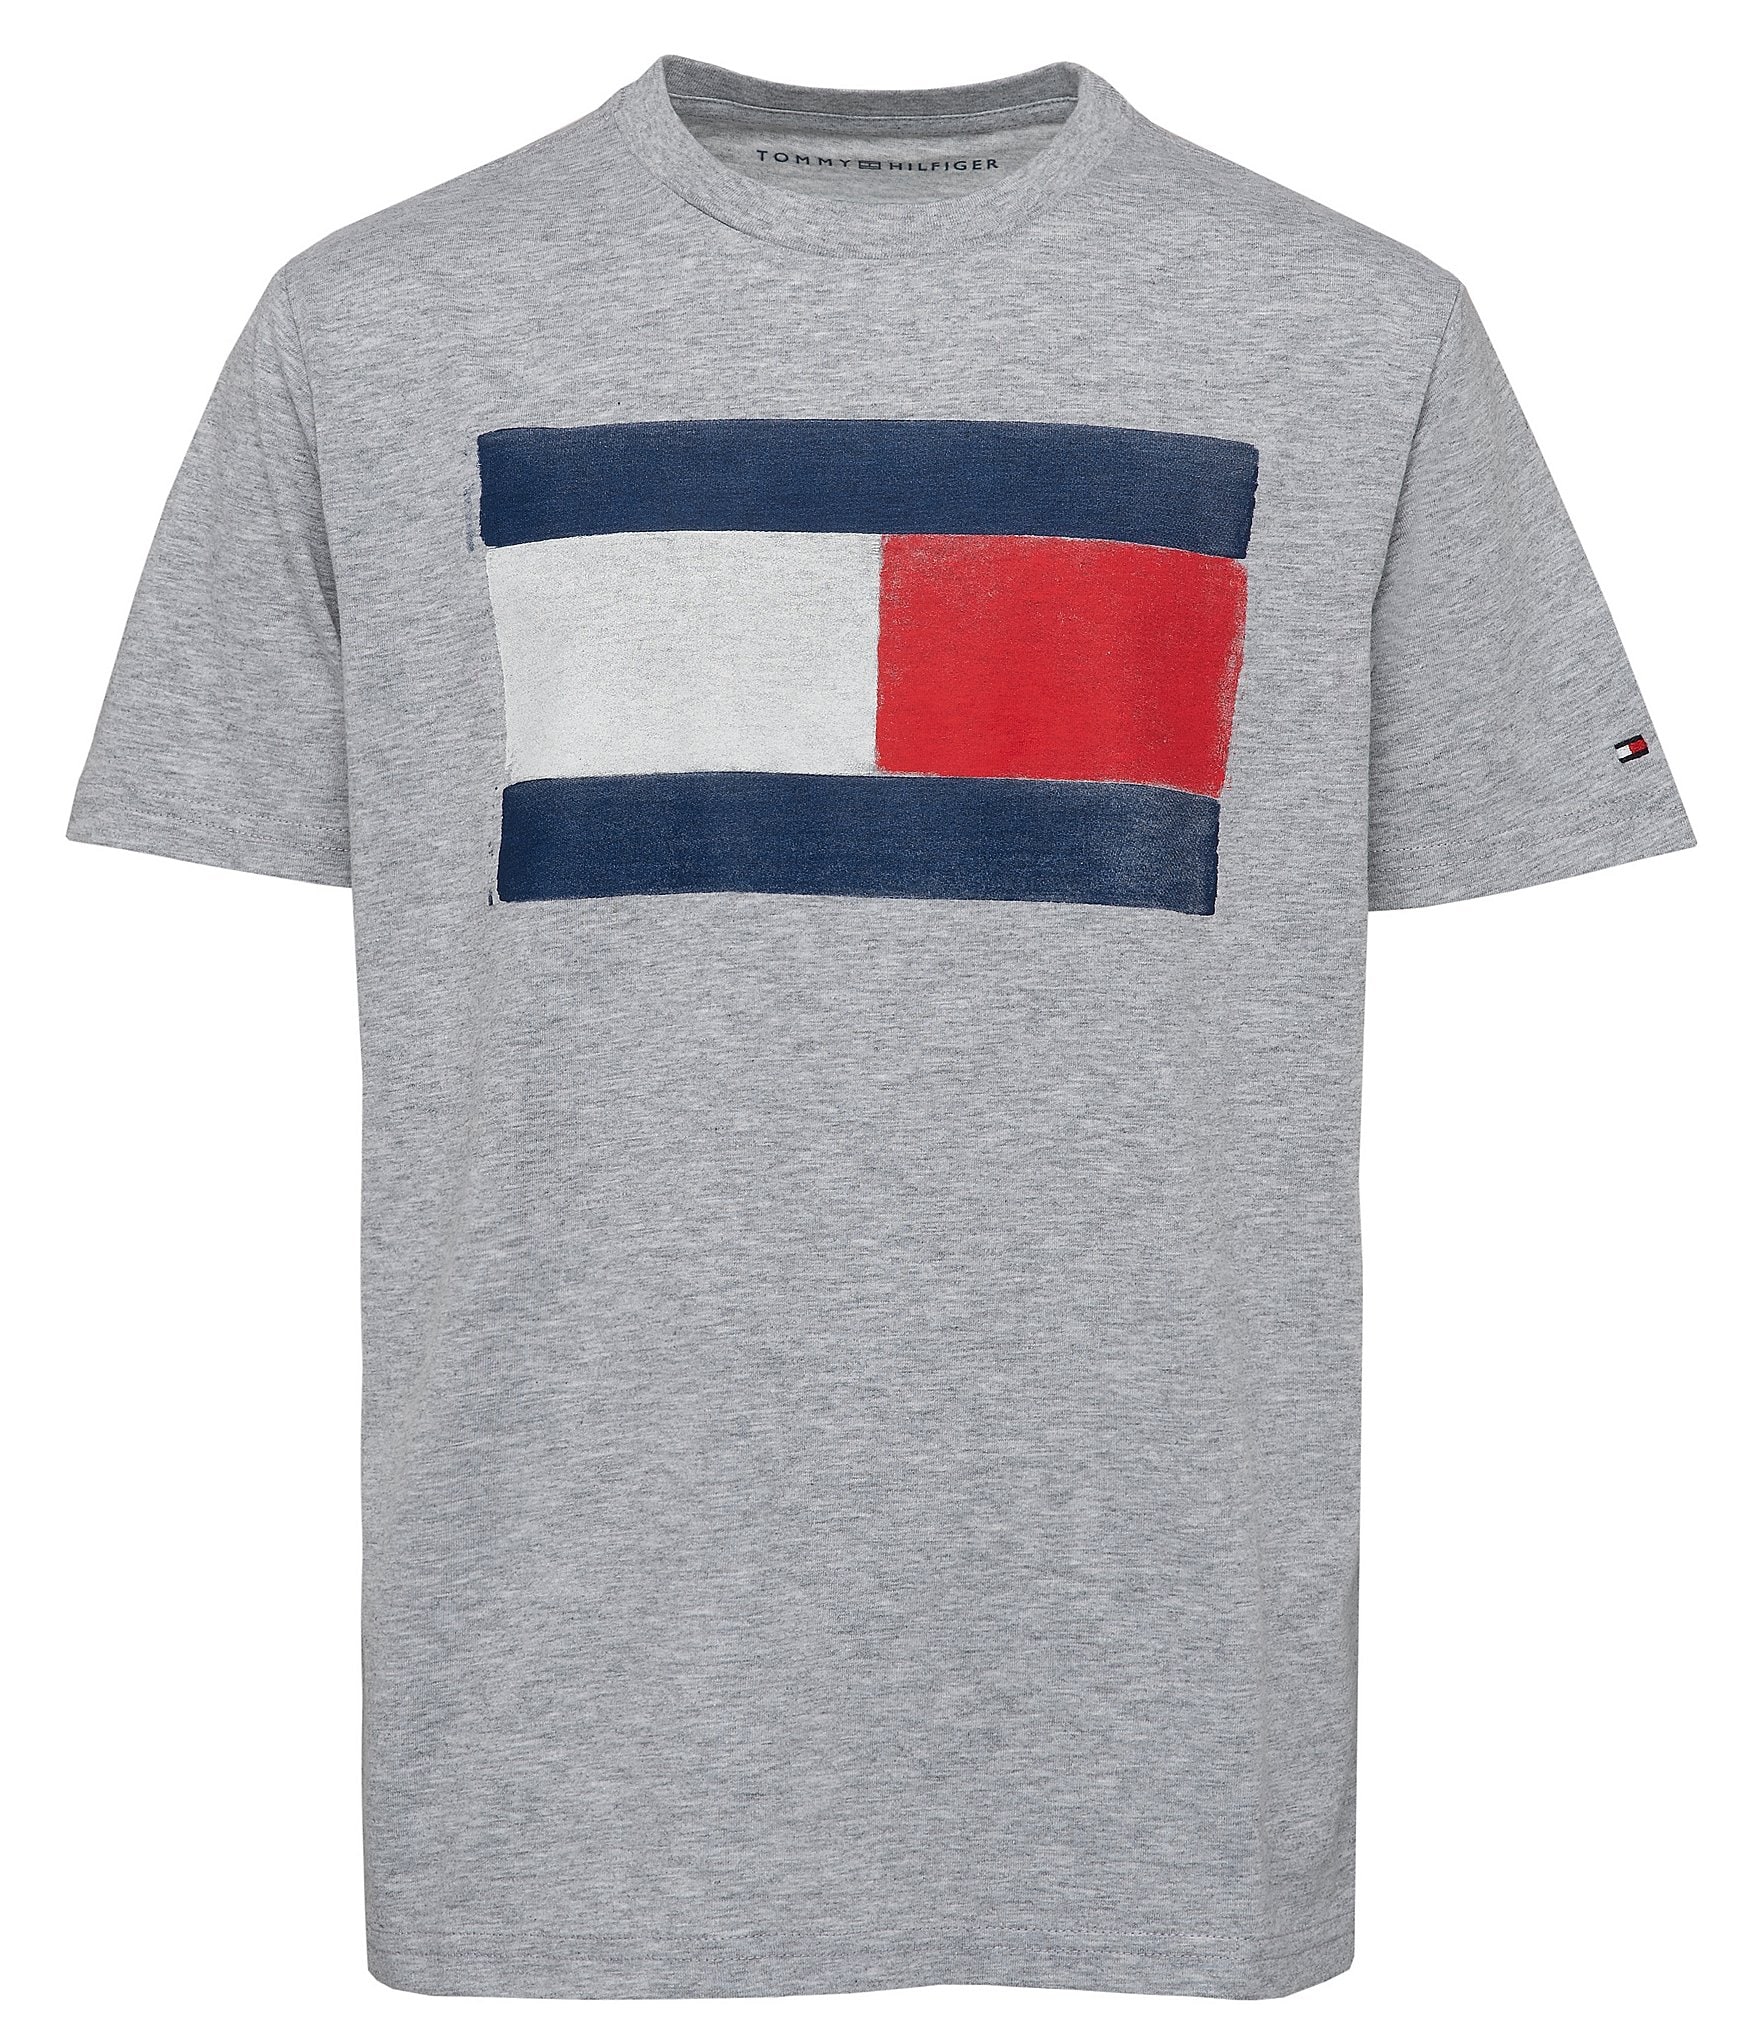 Vintage Tommy Hilfiger USA Big Logo Button Down Shirt (Size XL) — Roots